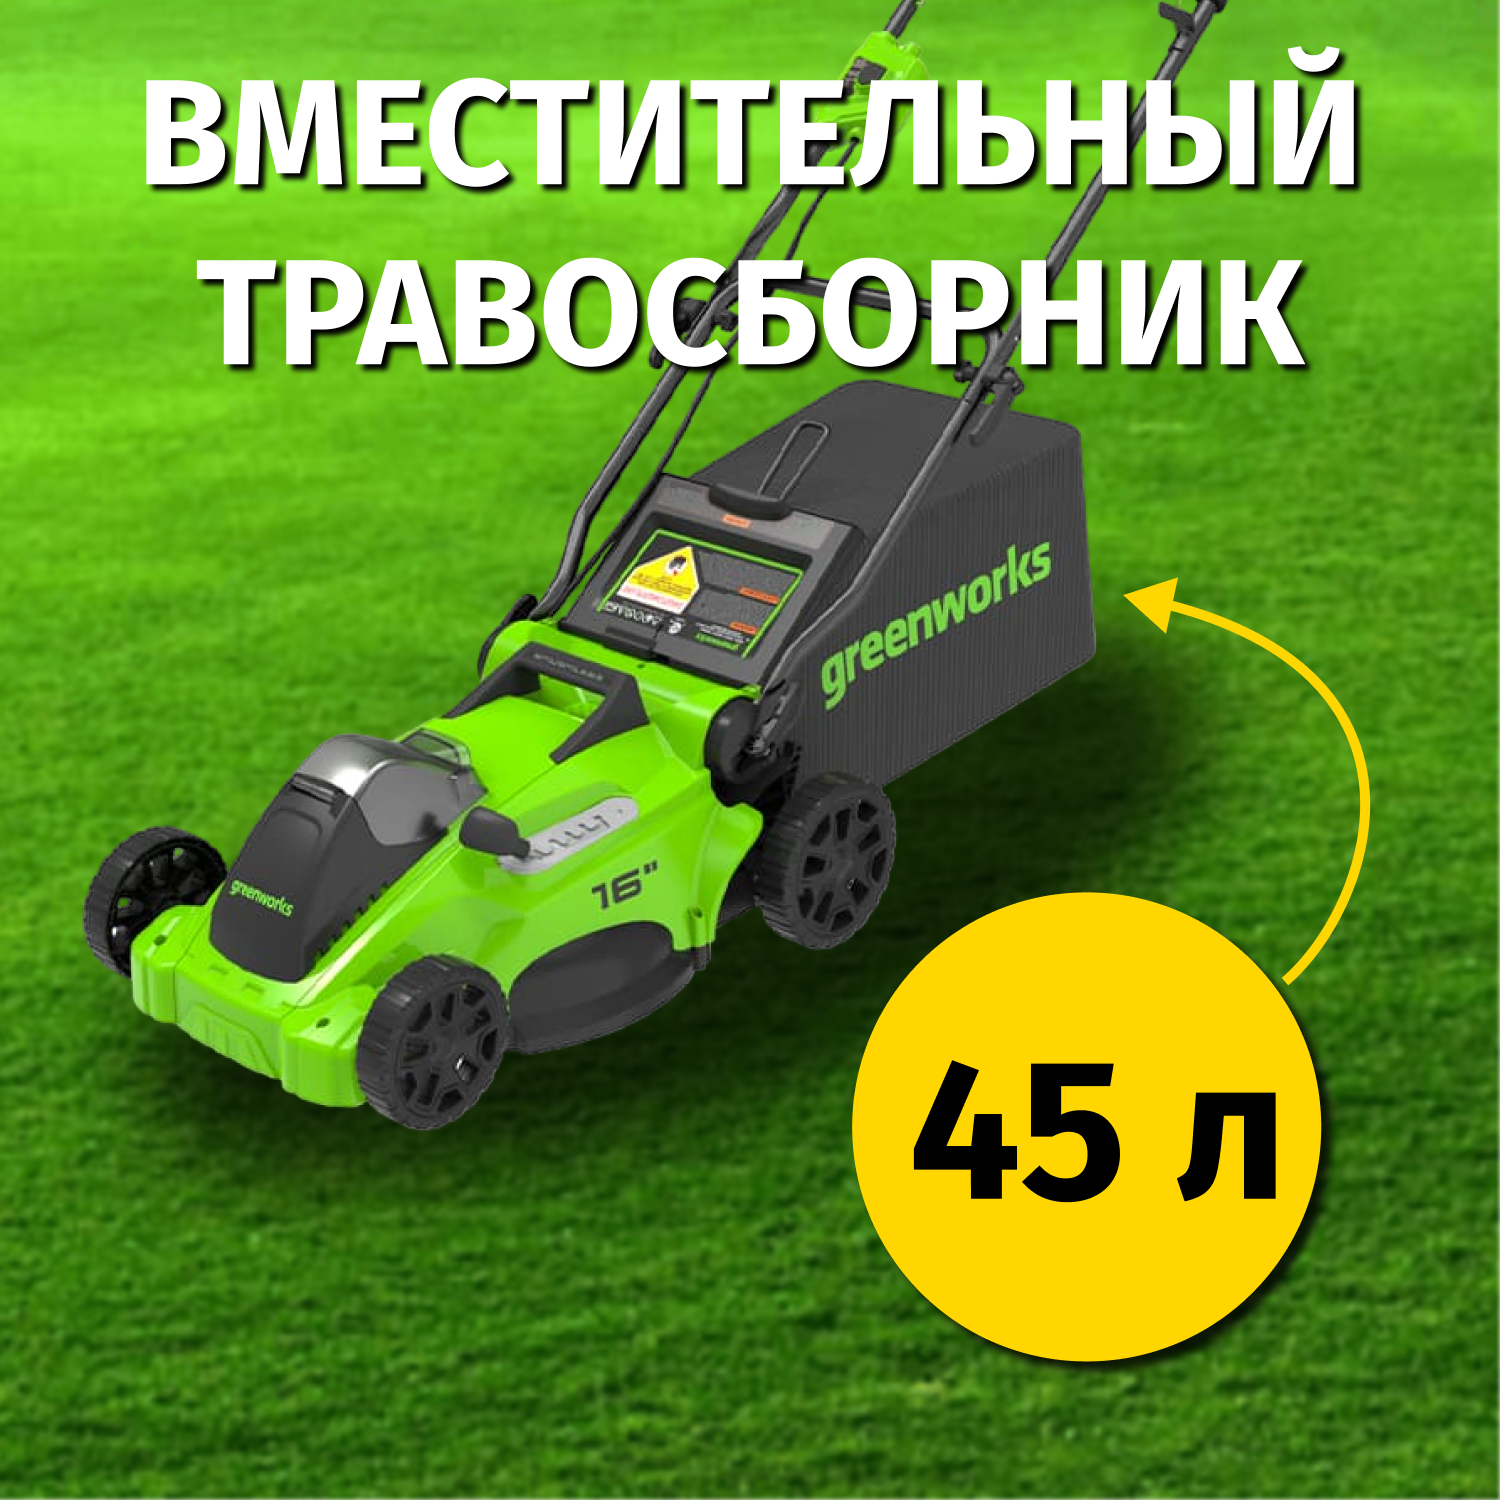 Рейтинг аккумуляторных газонокосилок: лучшие модели — ichip.ru | ichip.ru